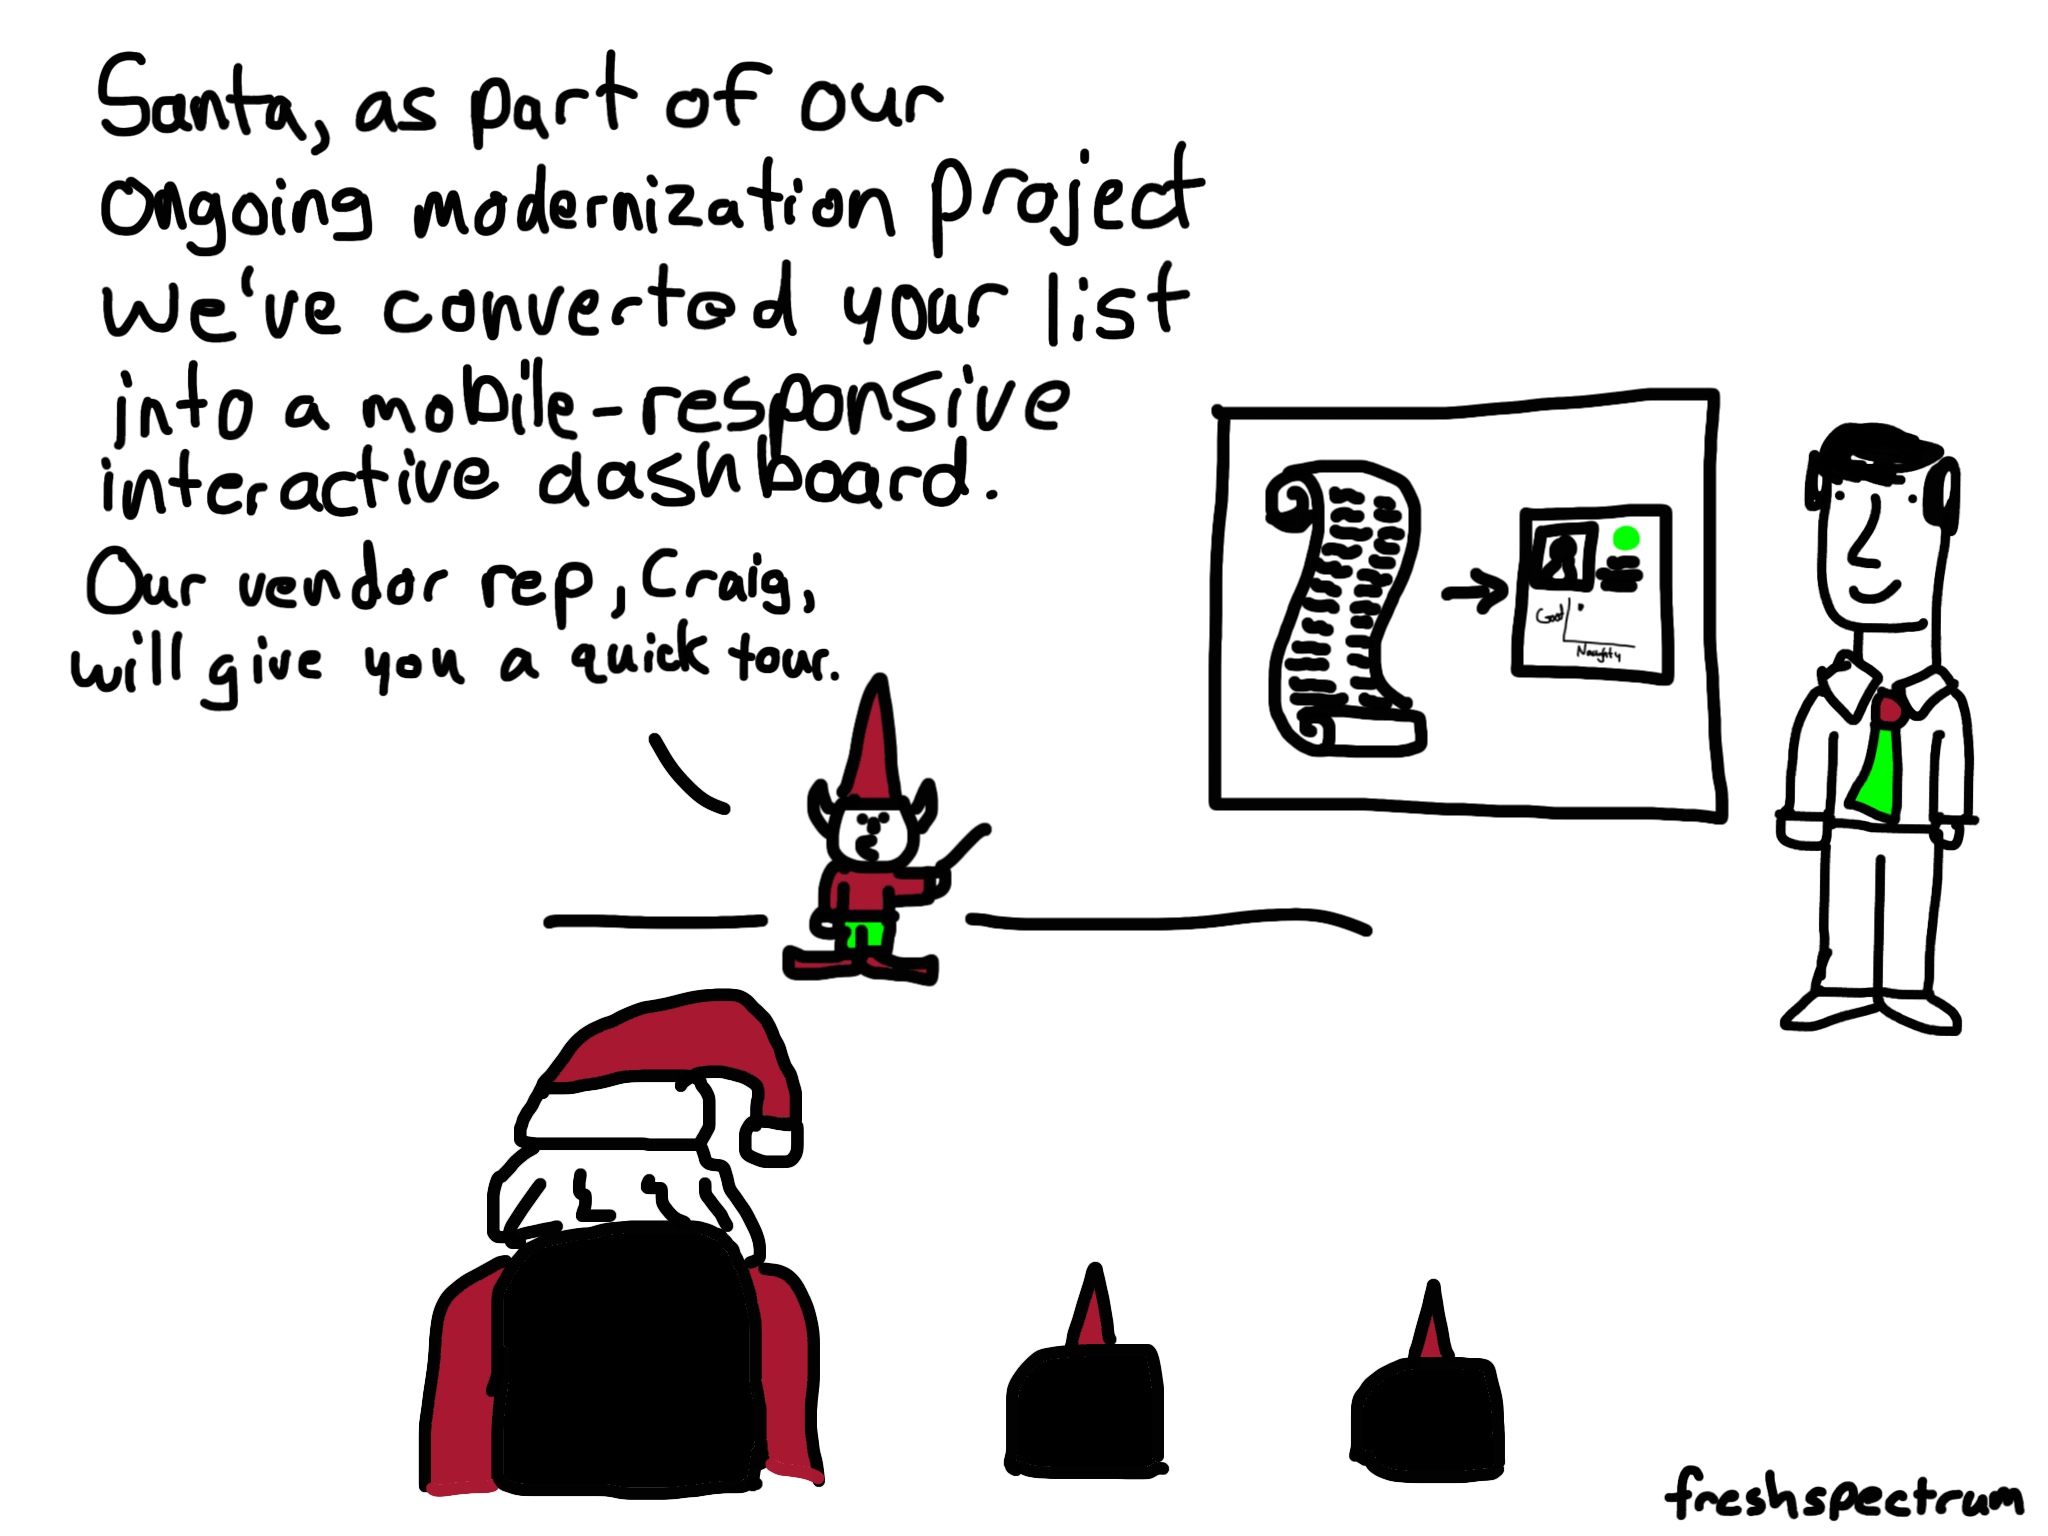 Santa's interactive dashboard cartoon by Chris Lysy